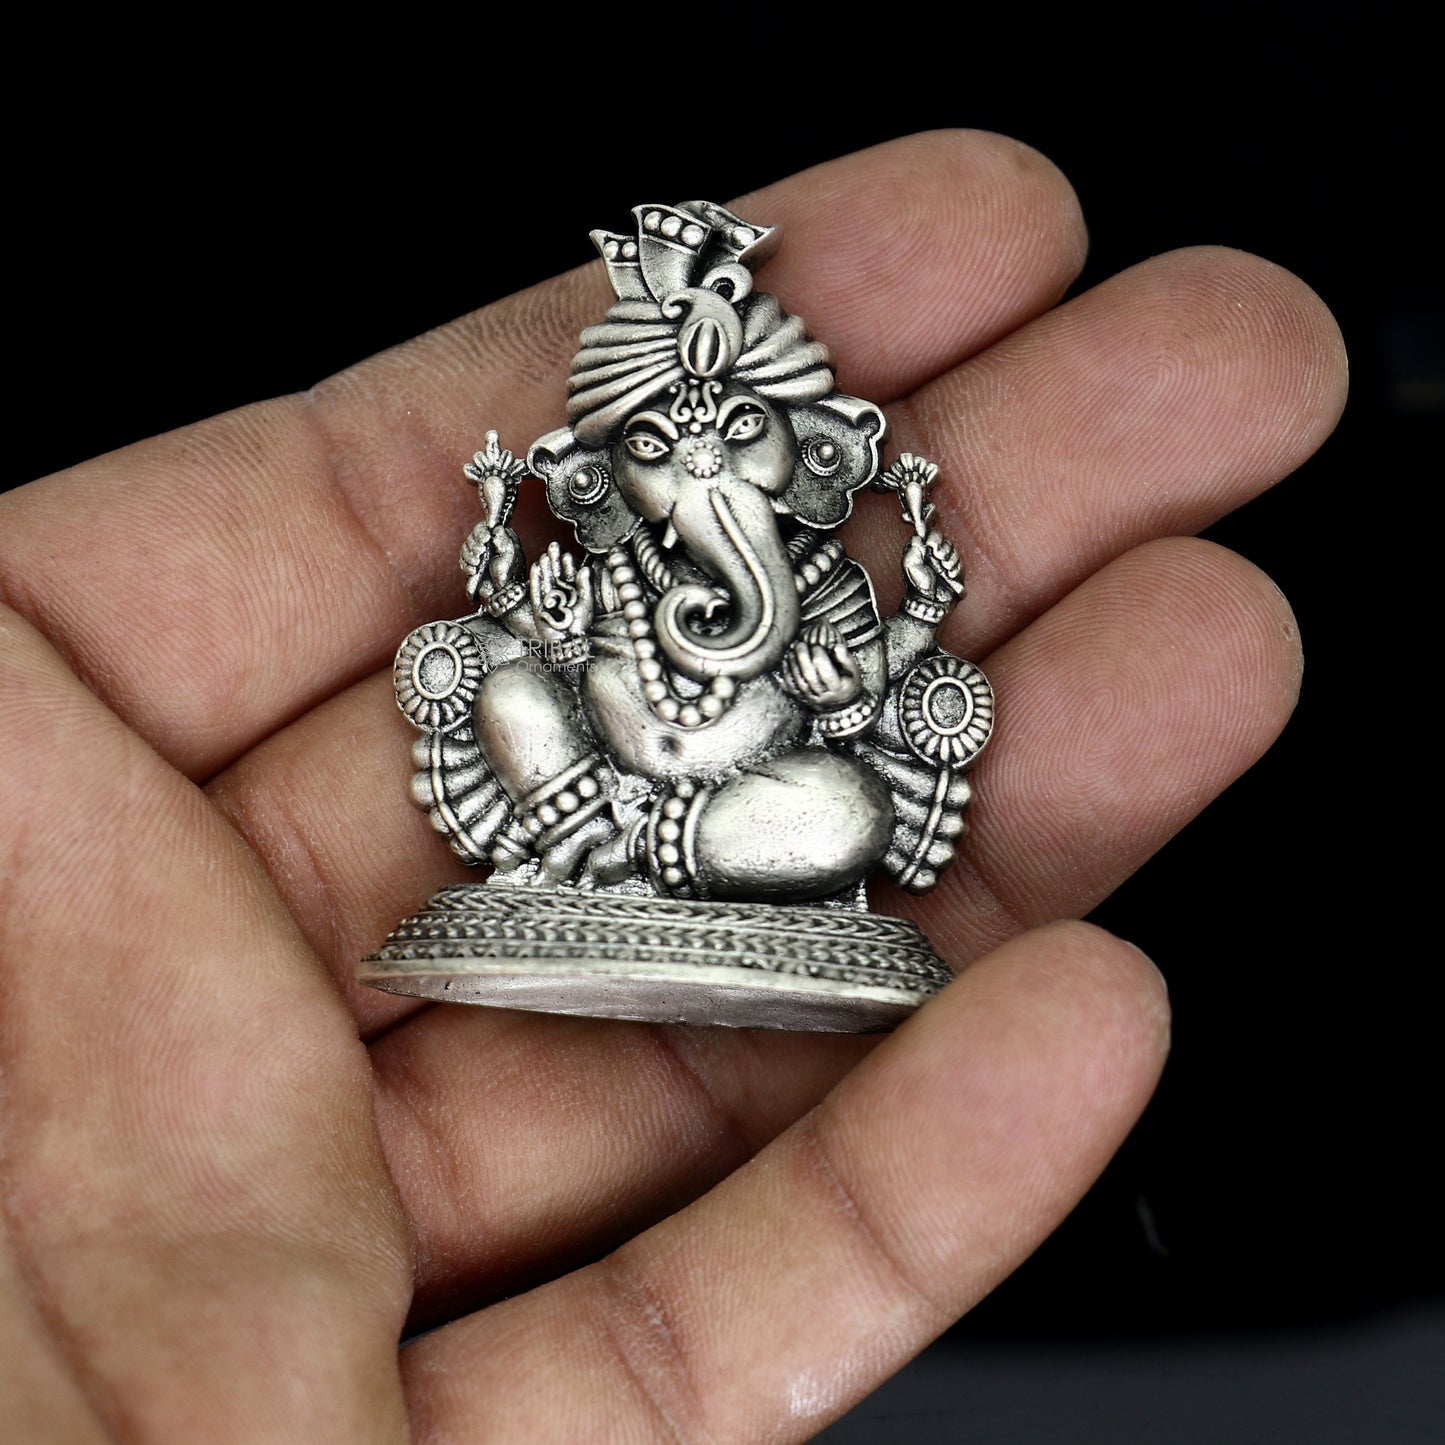 2.0" Divine 925 Sterling silver Lord Ganesh Idol, Pooja Articles, Silver Idols Figurine Ganesha statue sculpture Diwali puja gift art674 - TRIBAL ORNAMENTS